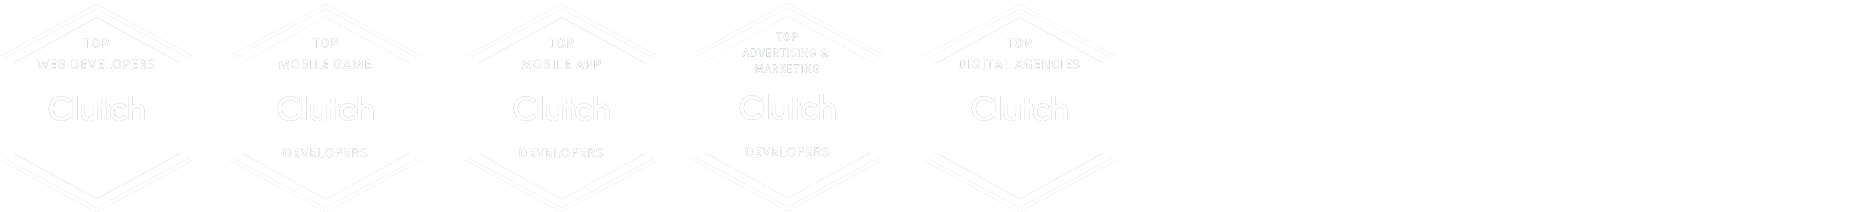 clutch_digital_awards